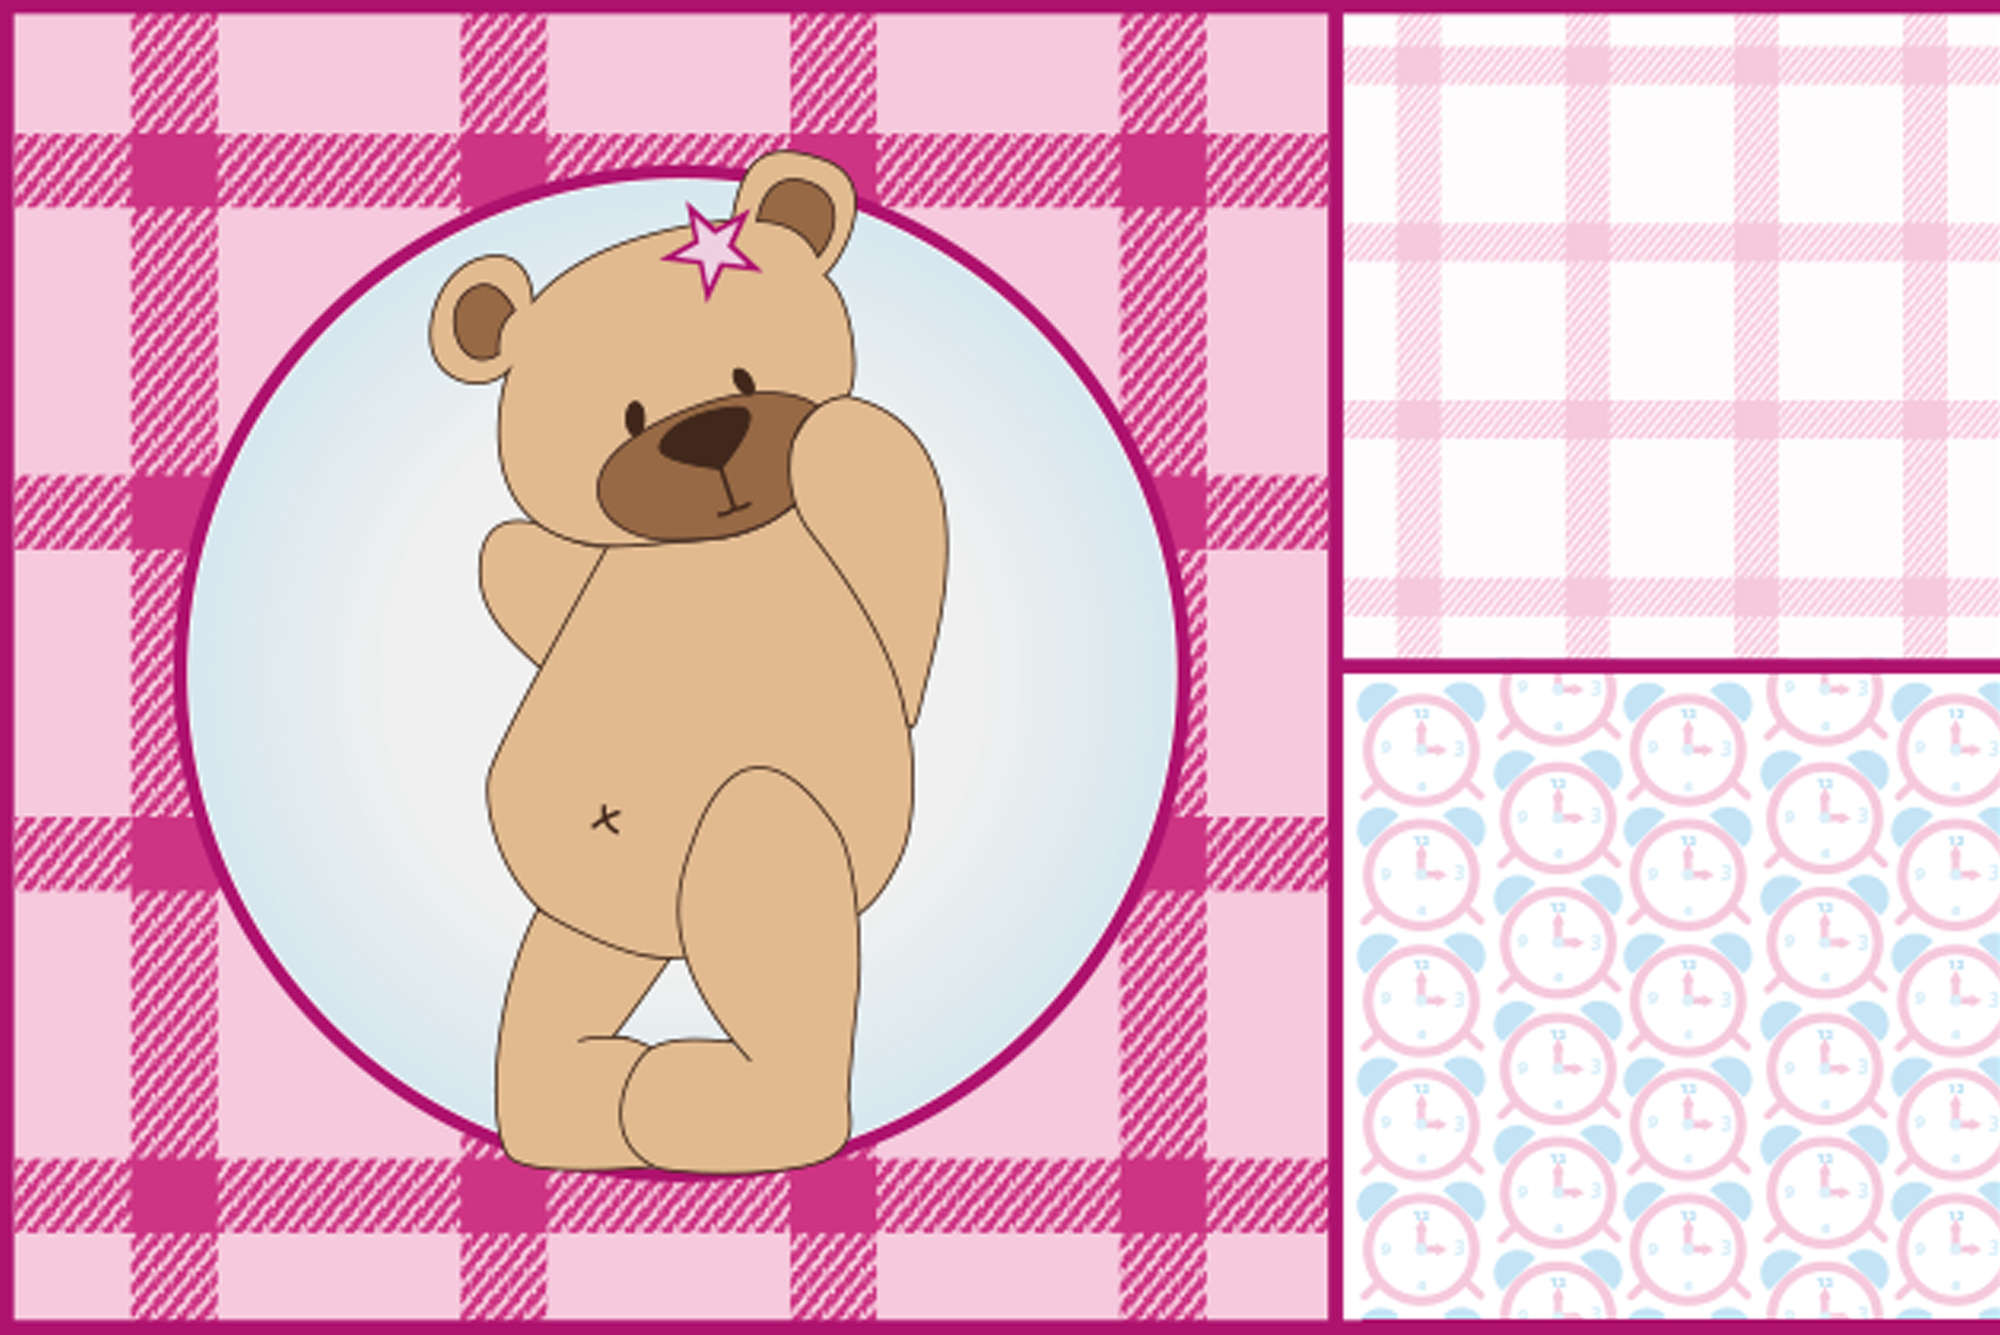             Fototapete Teddybär im Kinderdesign – Premium Glattvlies
        